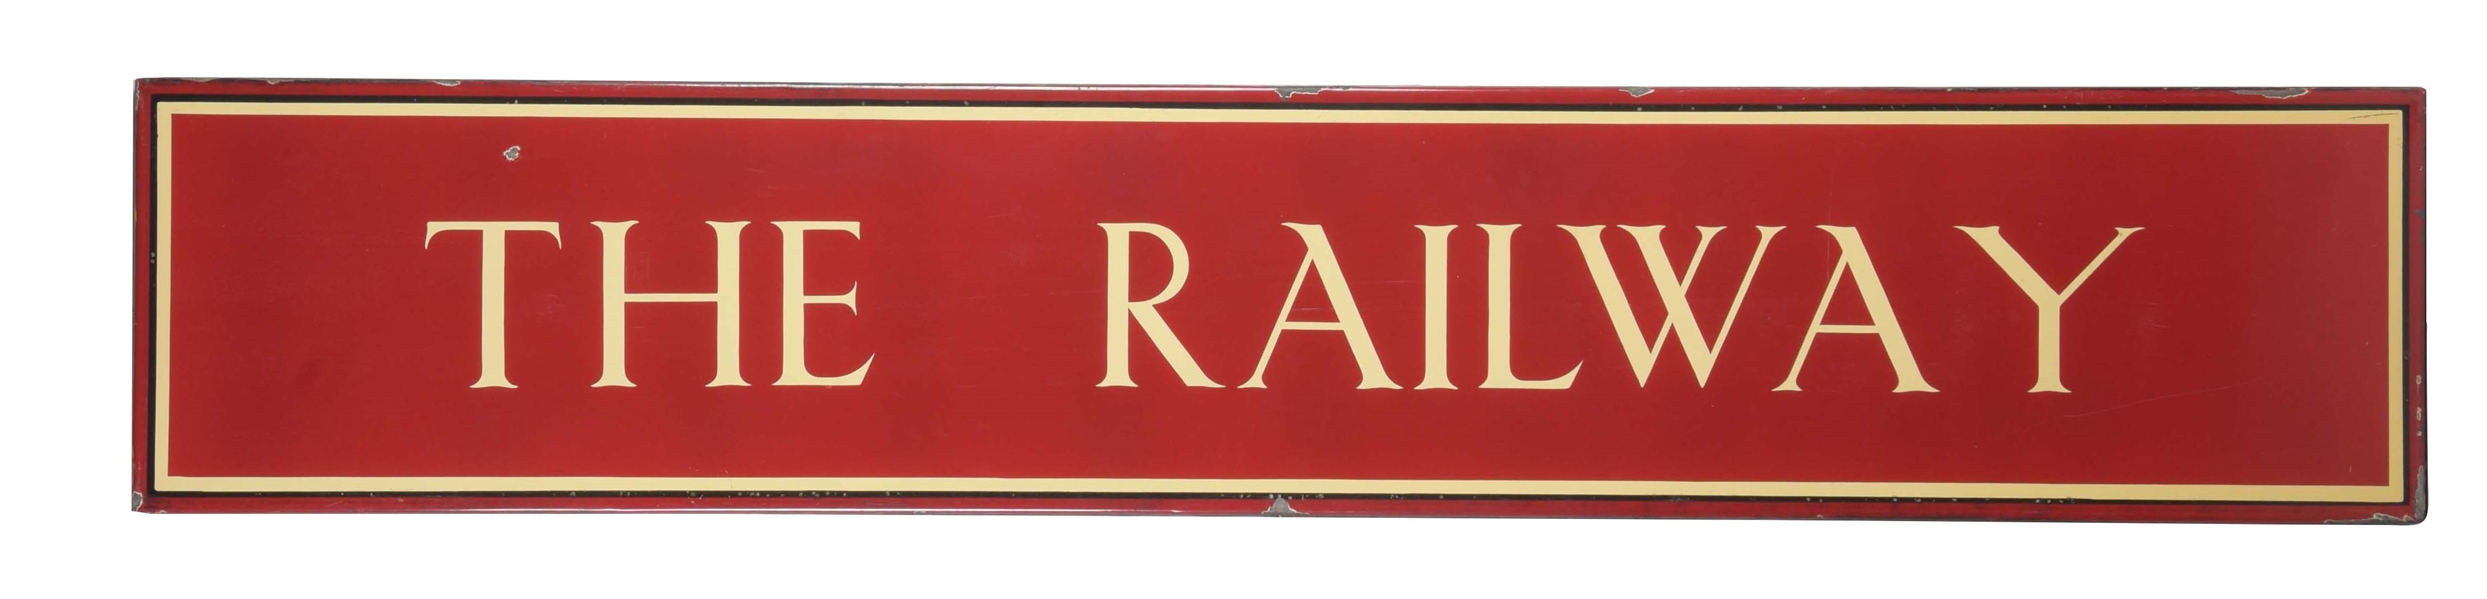 THE RAILWAY SELF FRAMED PORCELAIN STRIP SIGN.